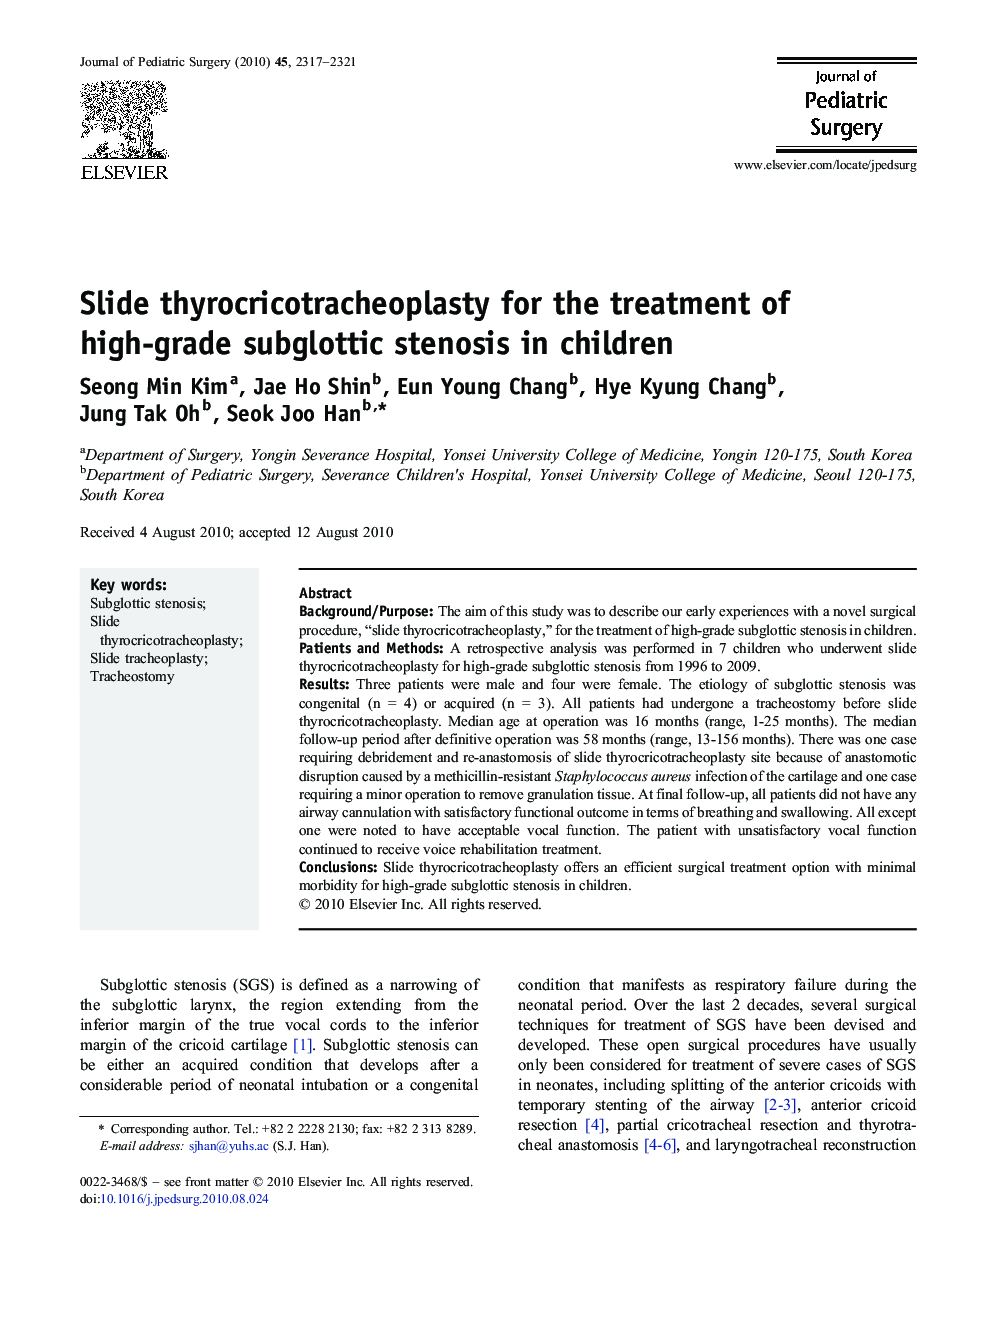 Slide thyrocricotracheoplasty for the treatment of high-grade subglottic stenosis in children